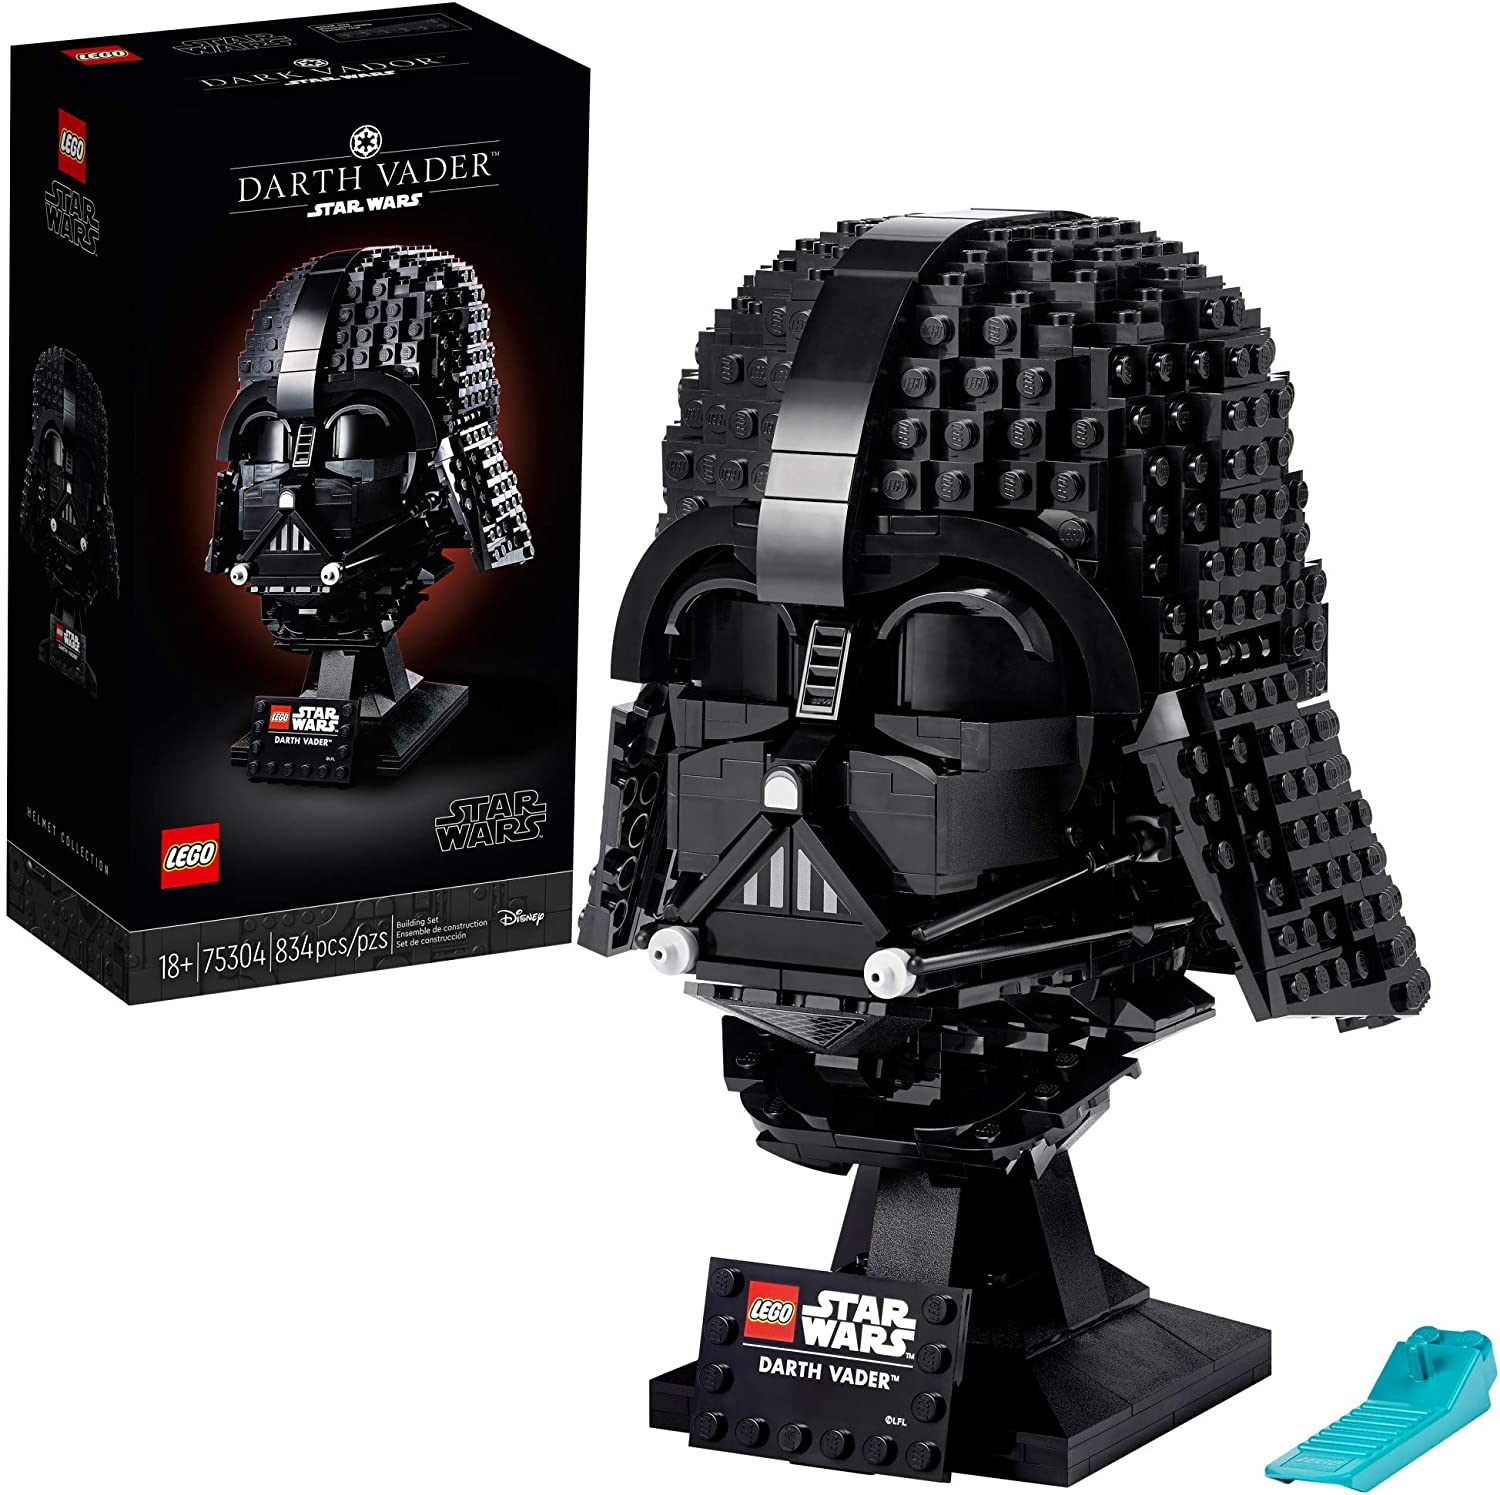 LEGO-Star-Wars-Darth-Vader-Helmet-75304-Collectible-Building-Toy-New-2021